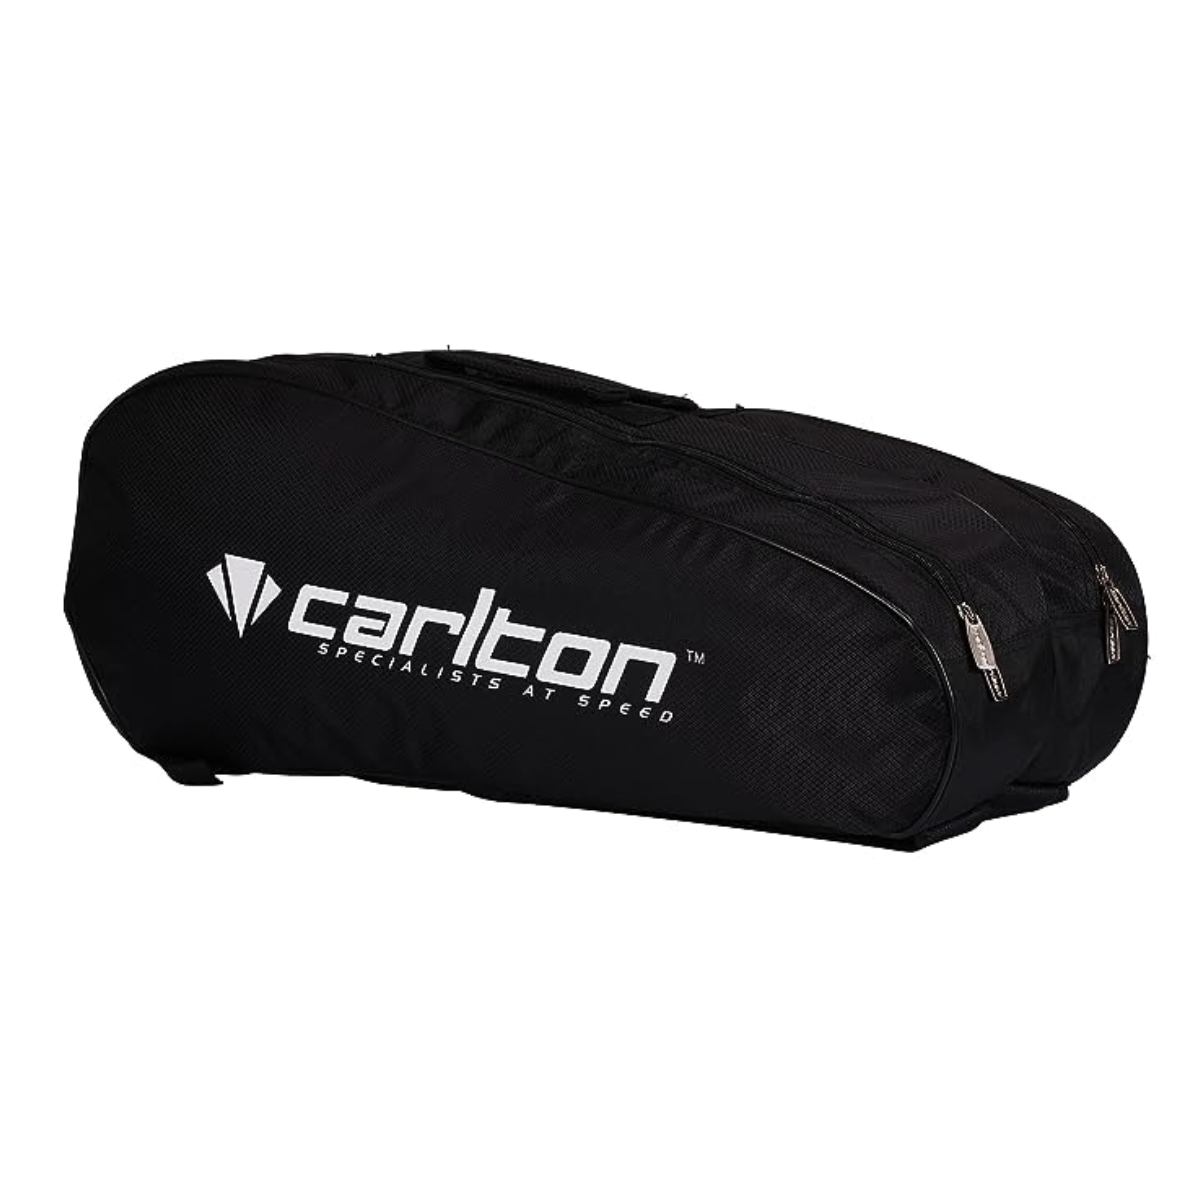 Carlton Vapour Trial 2 Compartment Badminton Kit Bag (Black/Green)